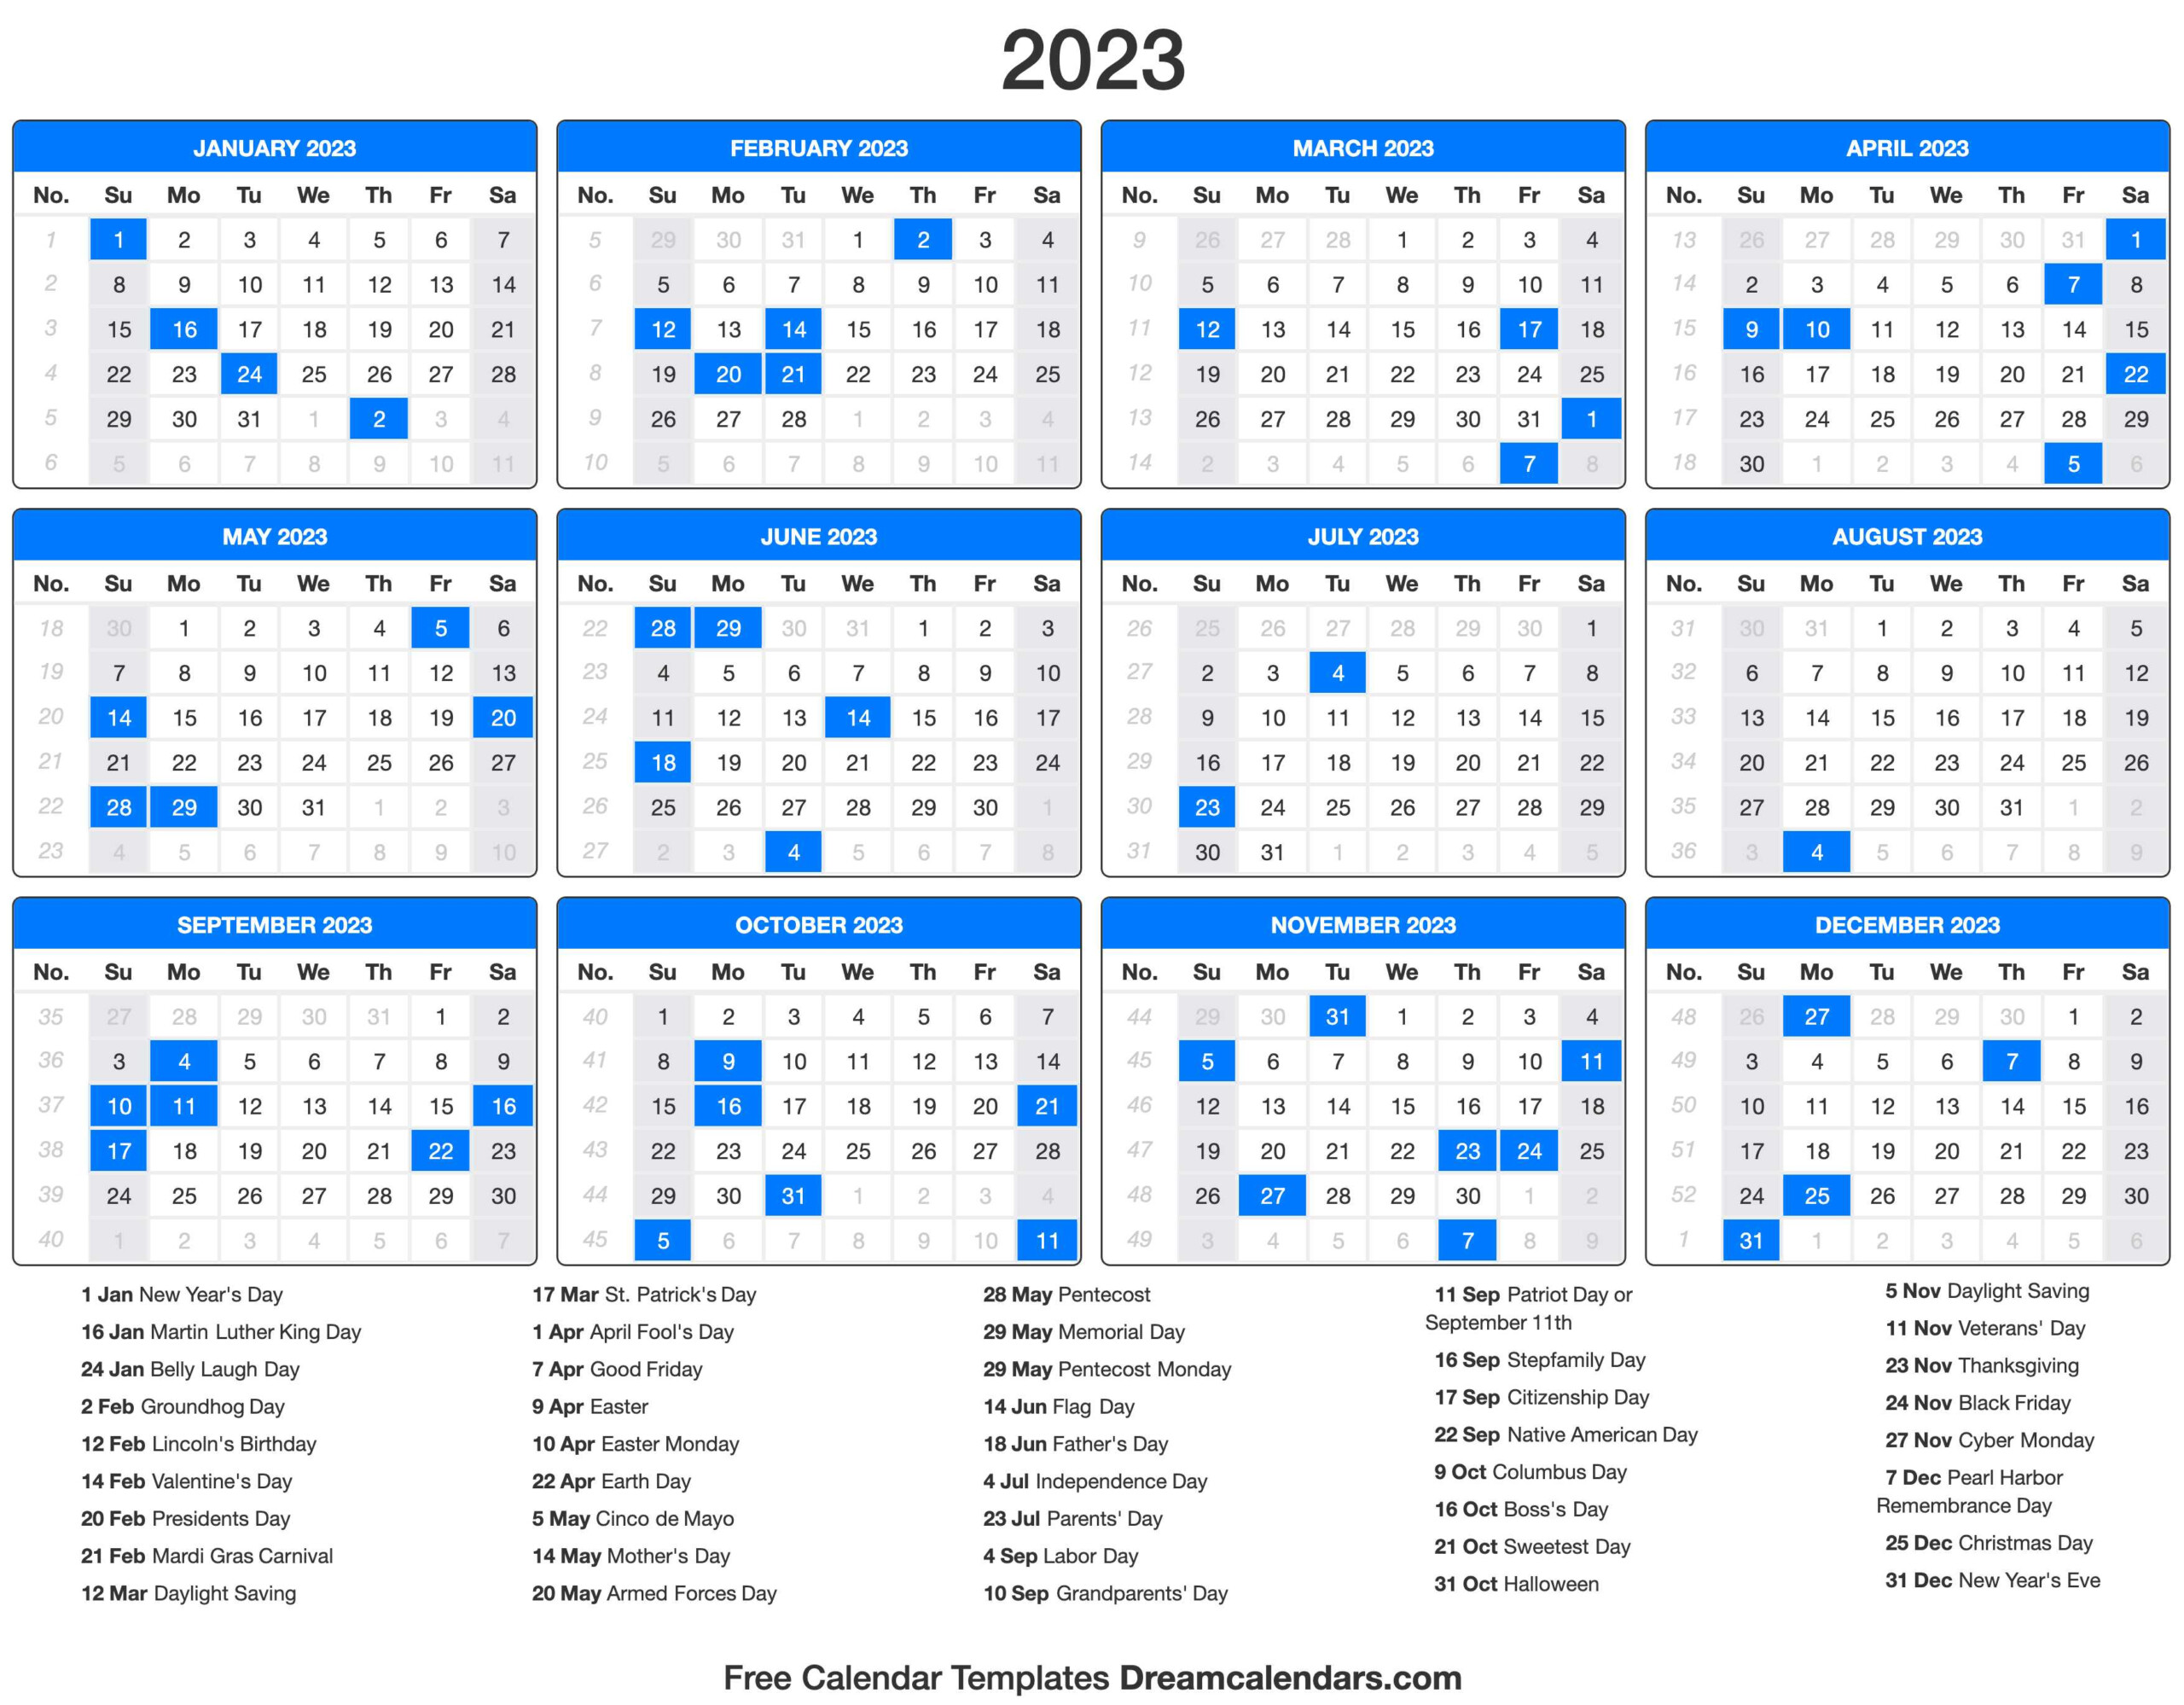 federal-reserve-holiday-calendar-2023-holidaycalendars